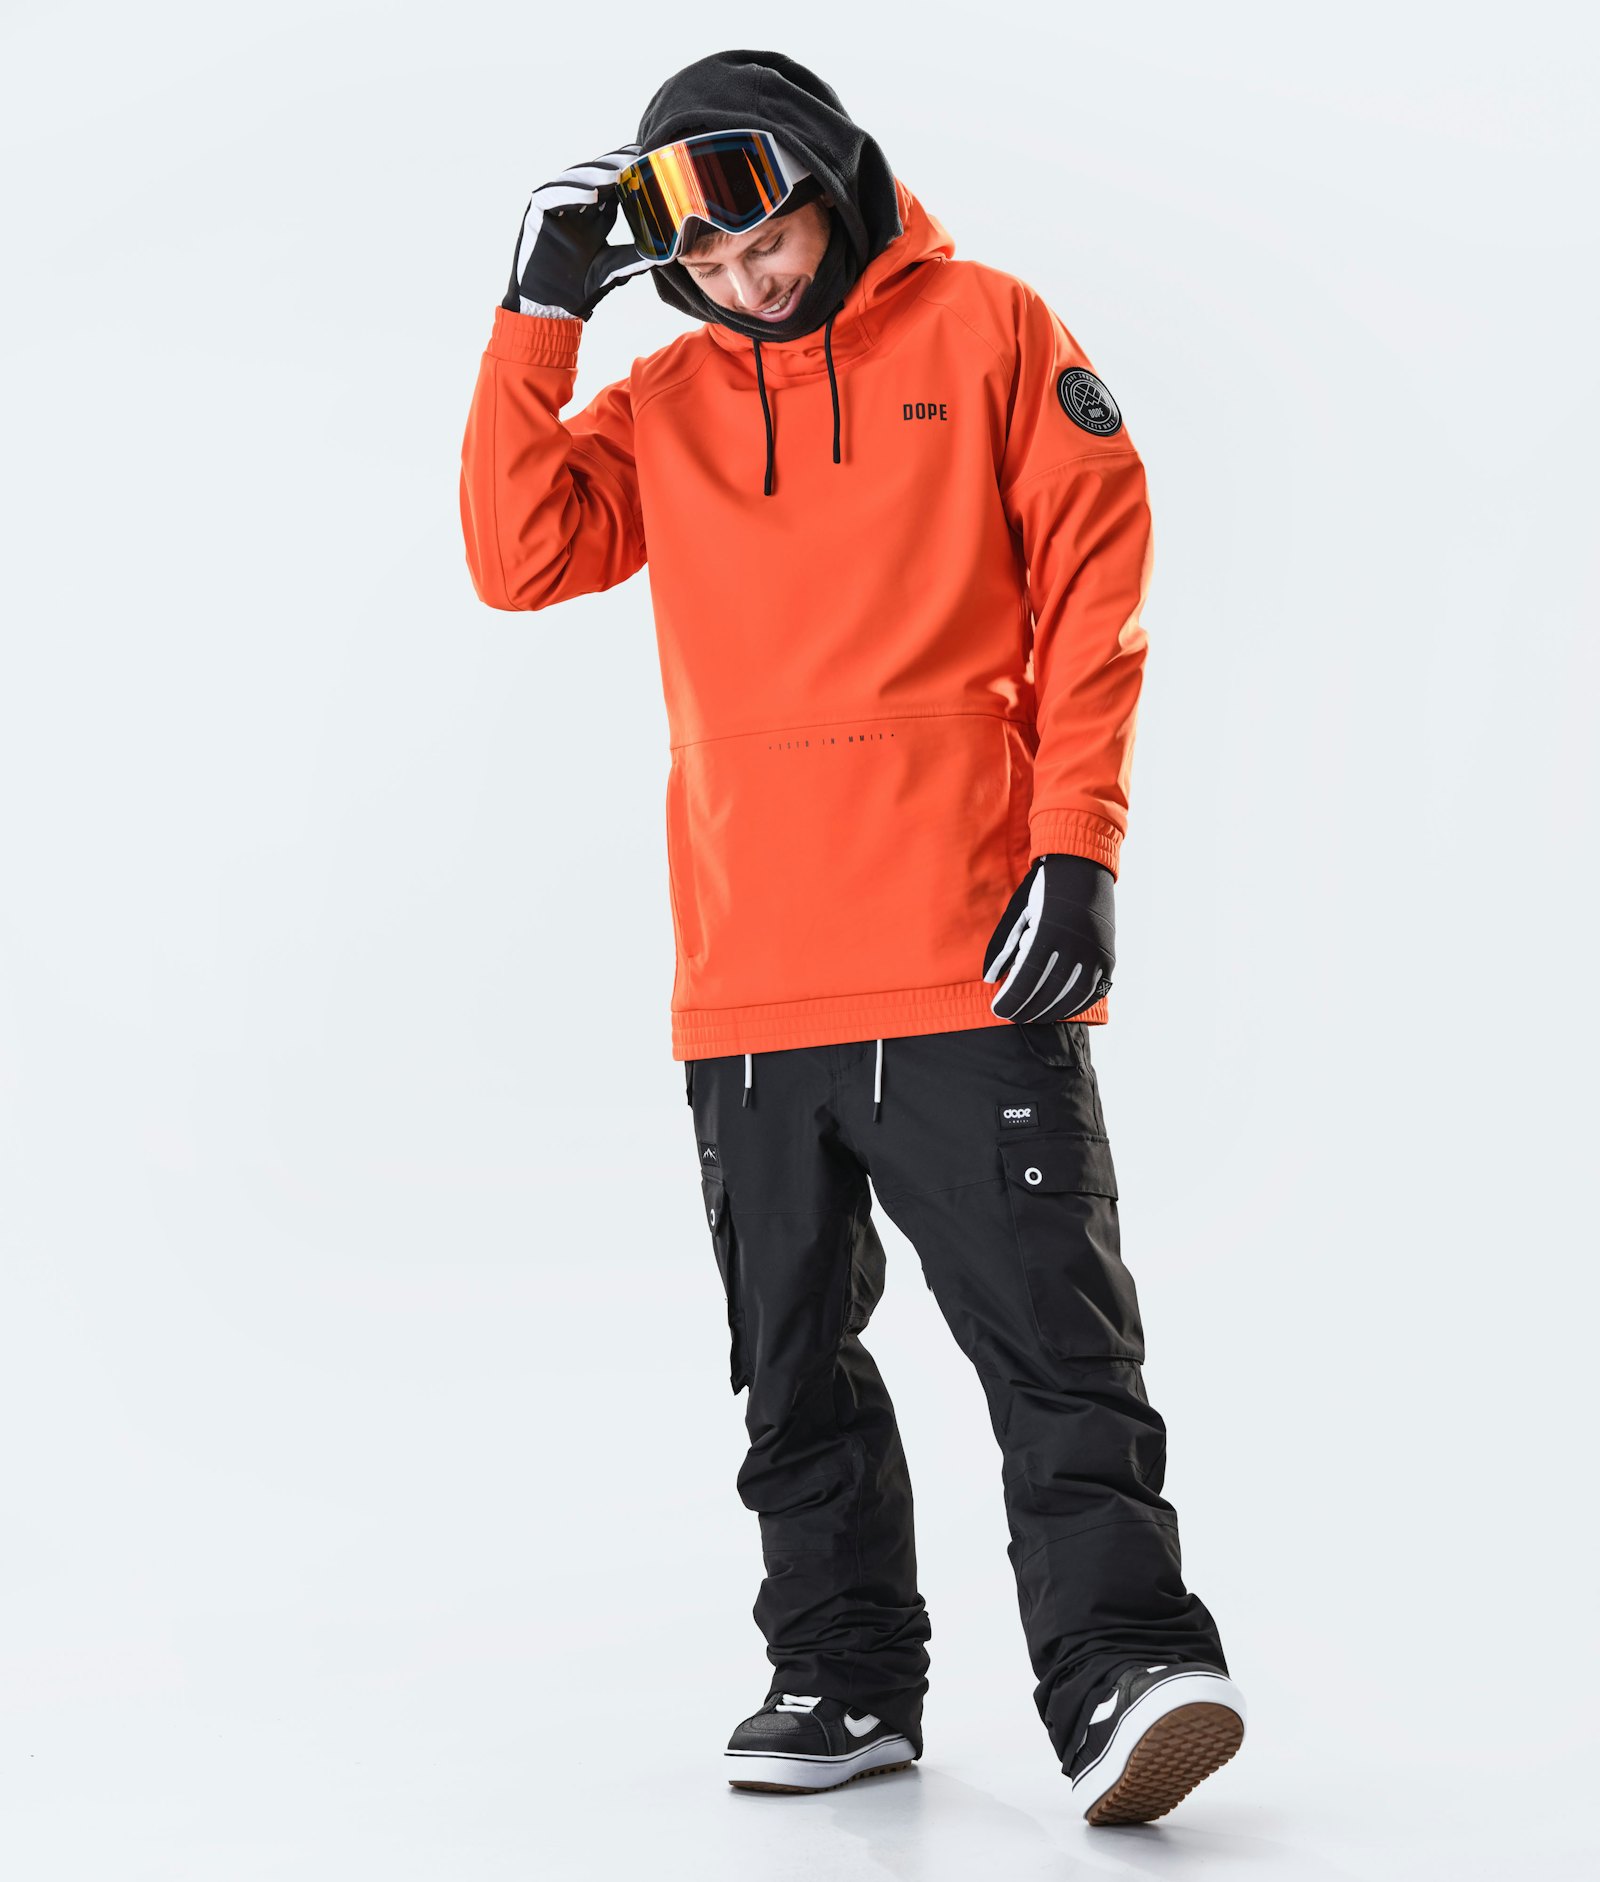 Rogue Veste Snowboard Homme Orange